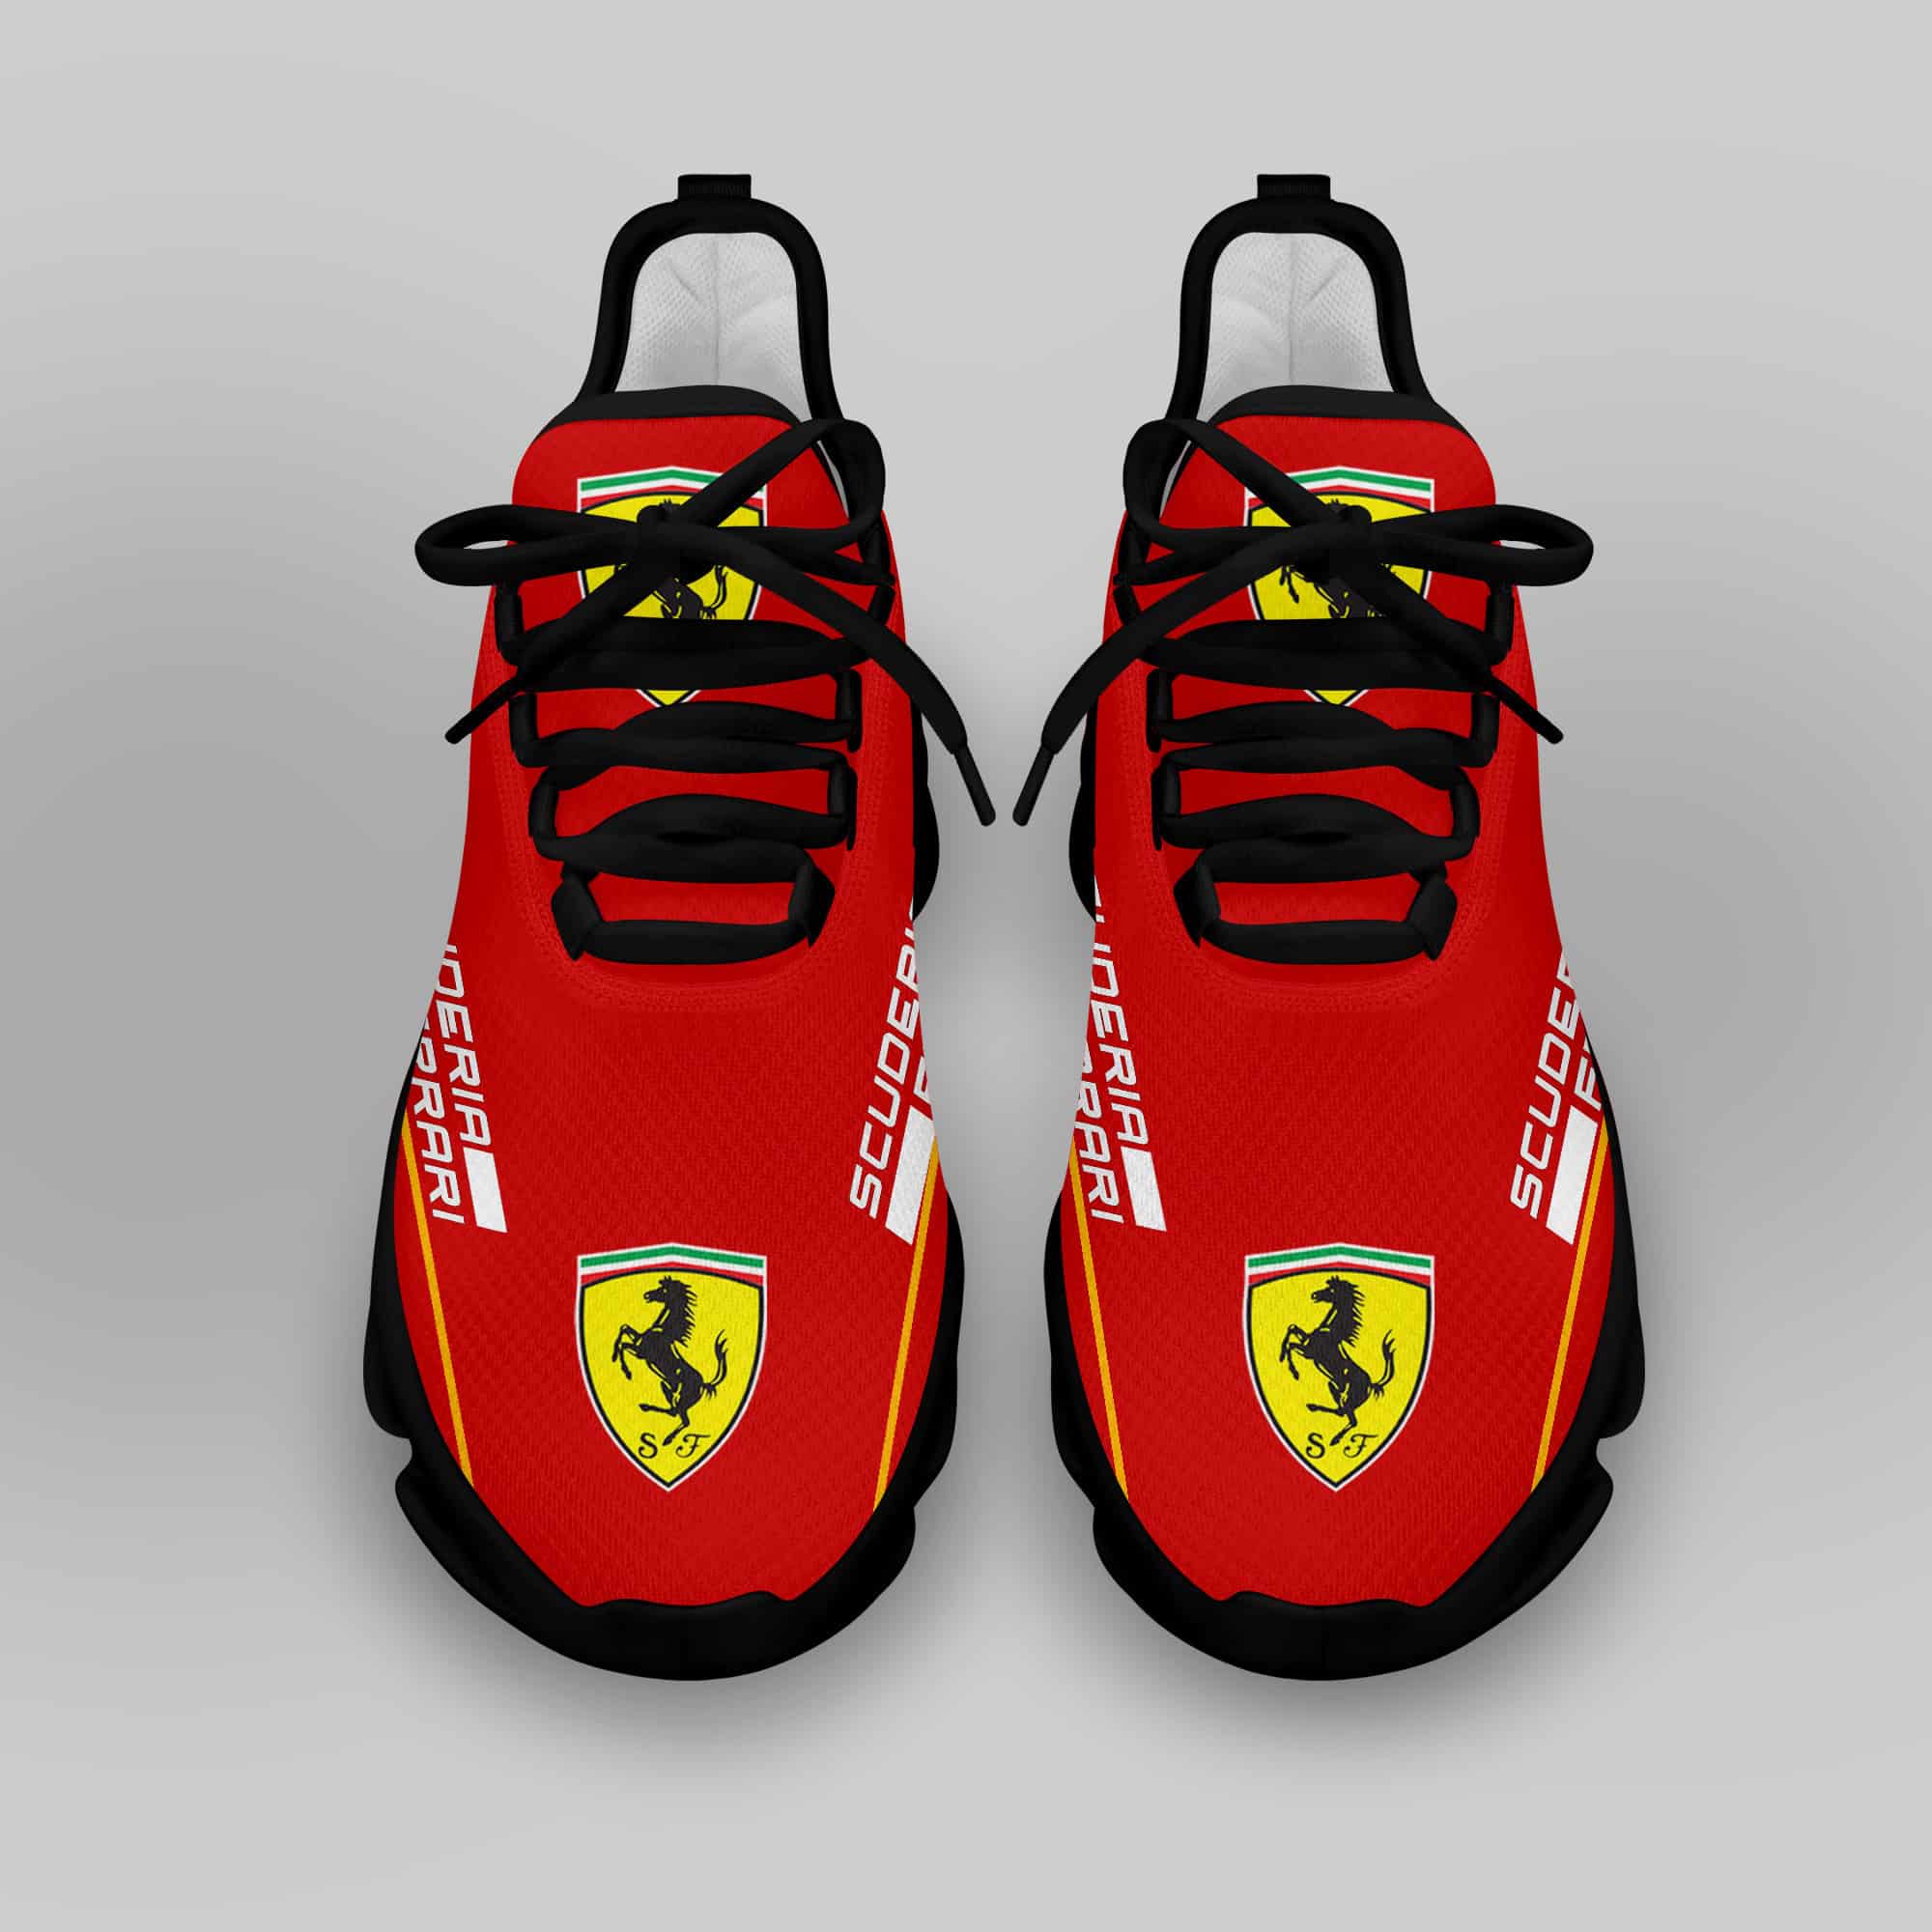 Ferrari Sneaker Running Shoes Max Soul Shoes Sneakers Ver 14 4